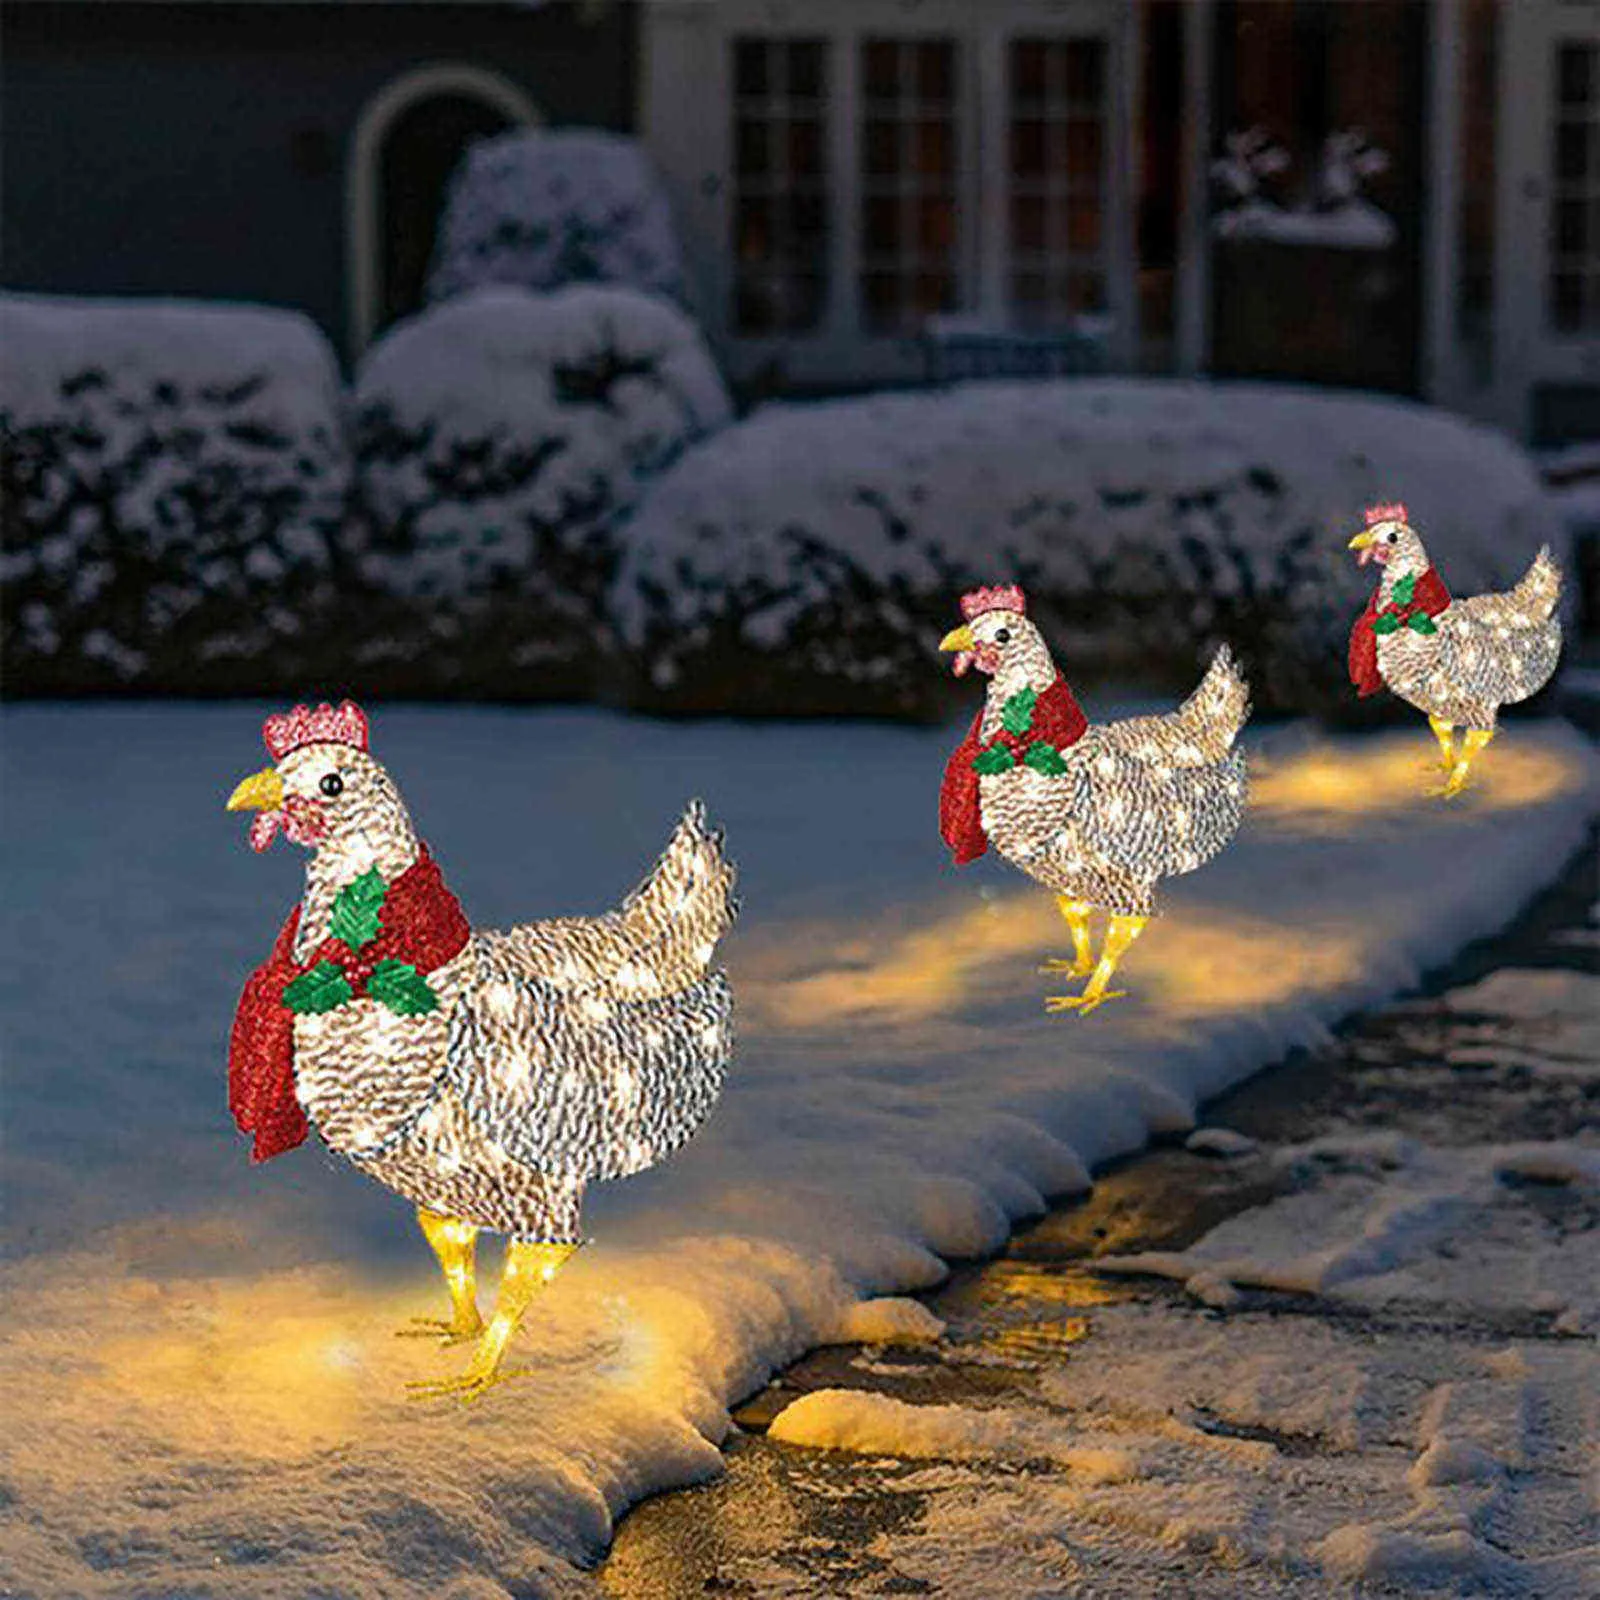 Courtyard Christmas Decoration Scarf Lights Chicken Ornaments Garden Pendant Home Decor Navidad Natal Kids Gift New Year 2022